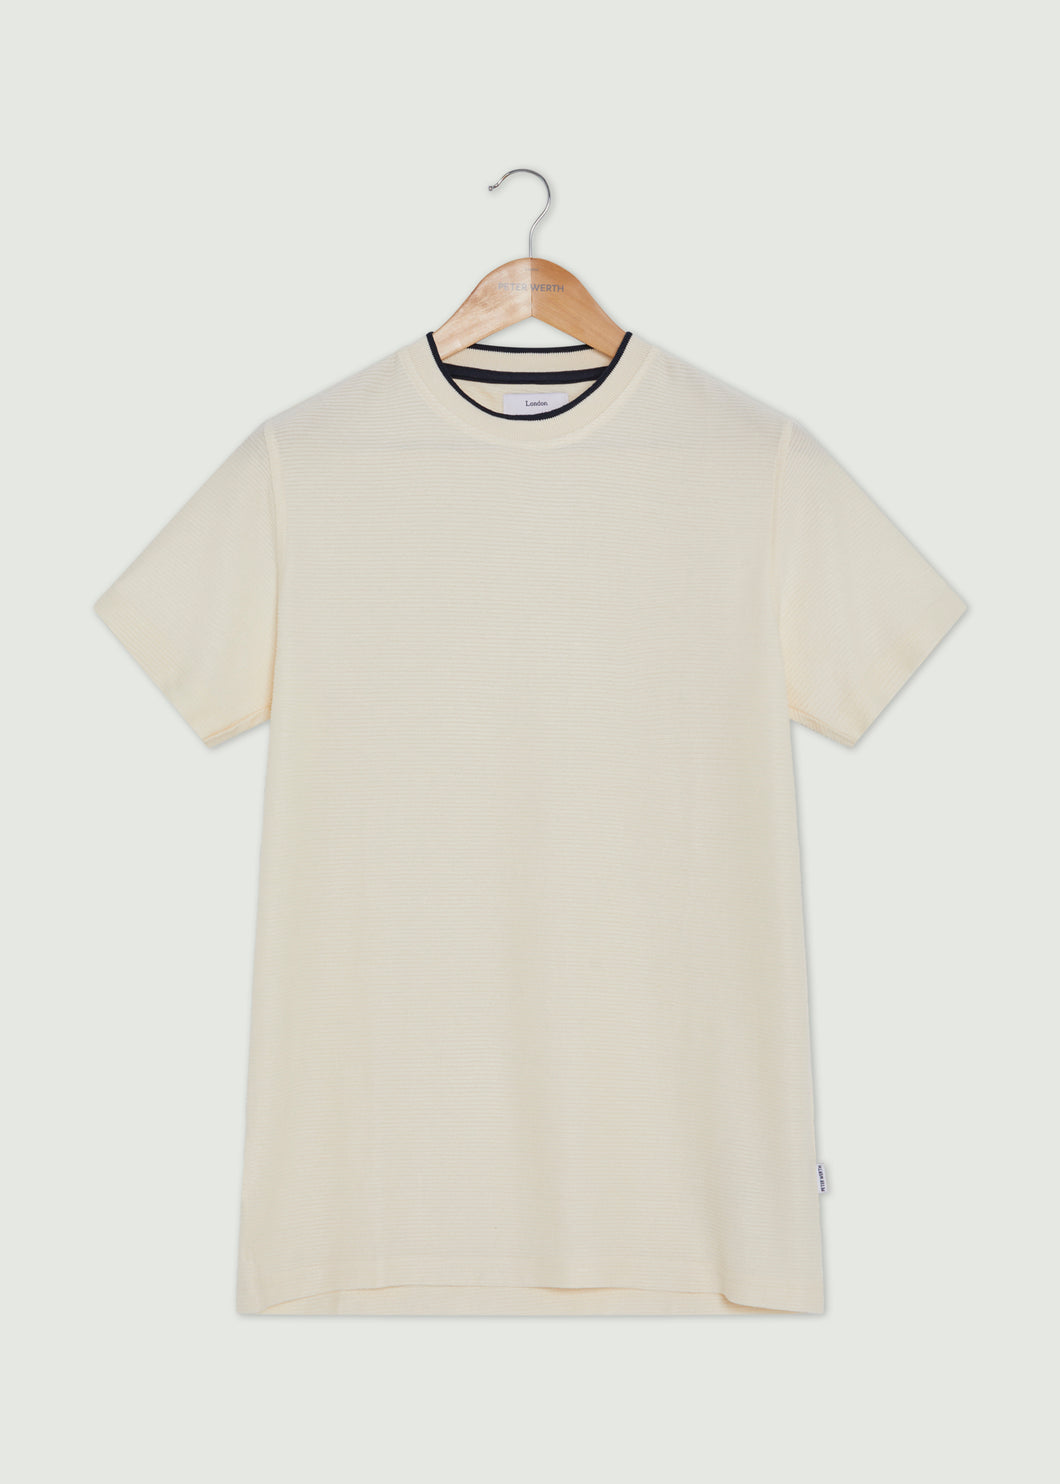 Providence T-Shirt - Off White